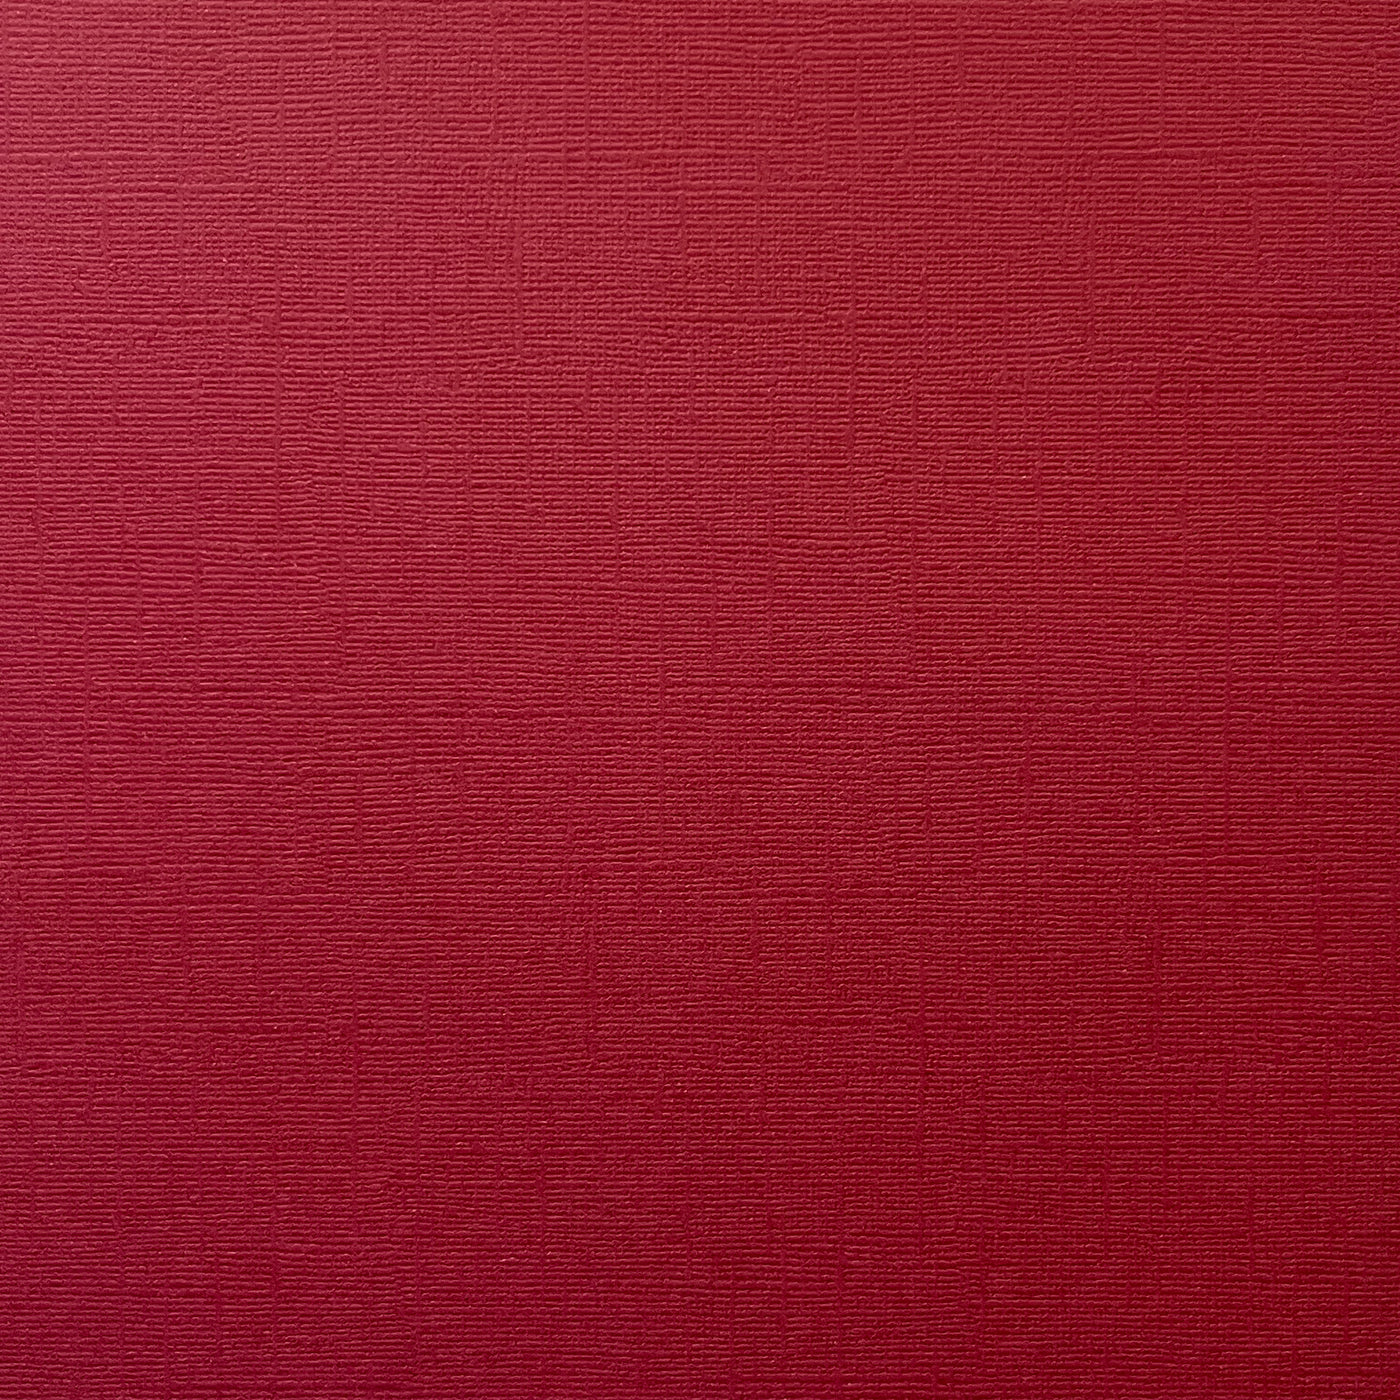 RED WINE - Textured 12x12 Cardstock - Encore Paper